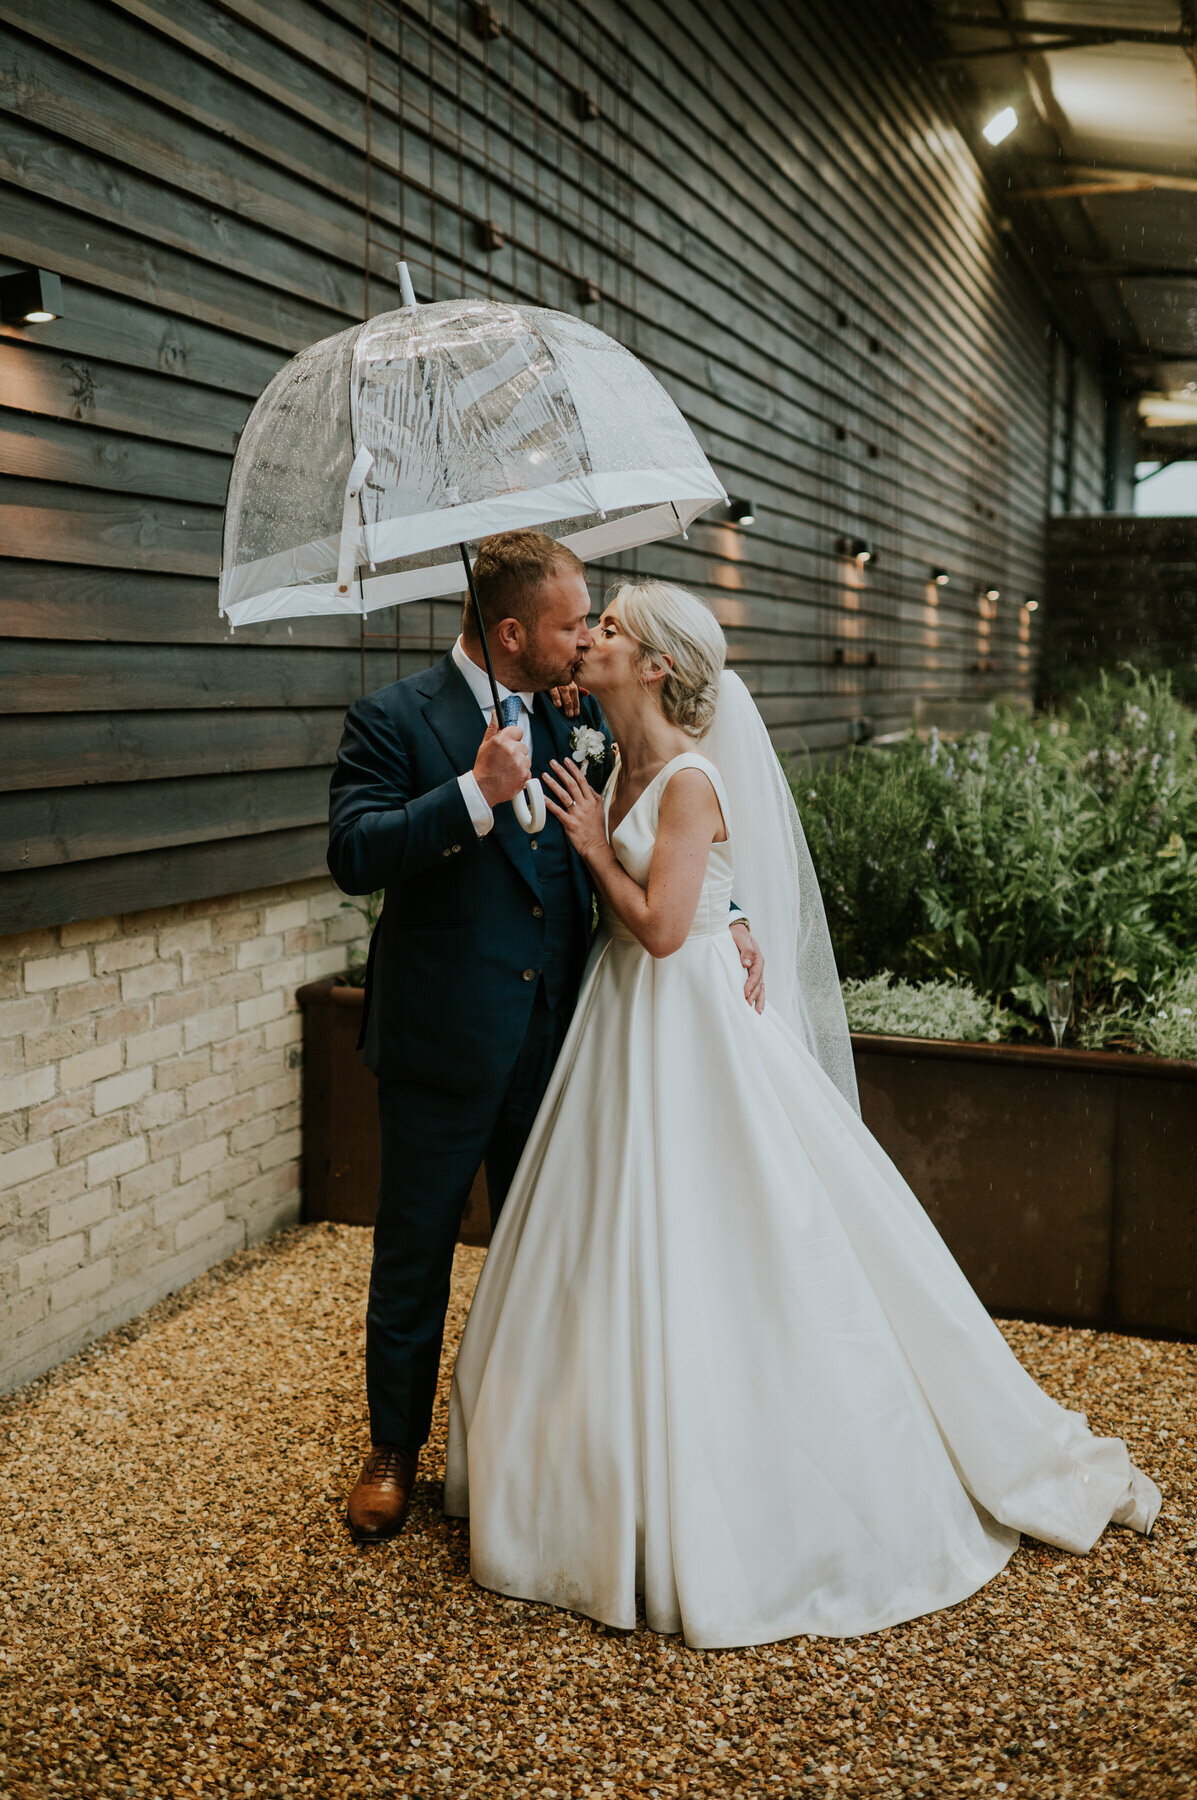 bride and groom kissing under umbrella in rain